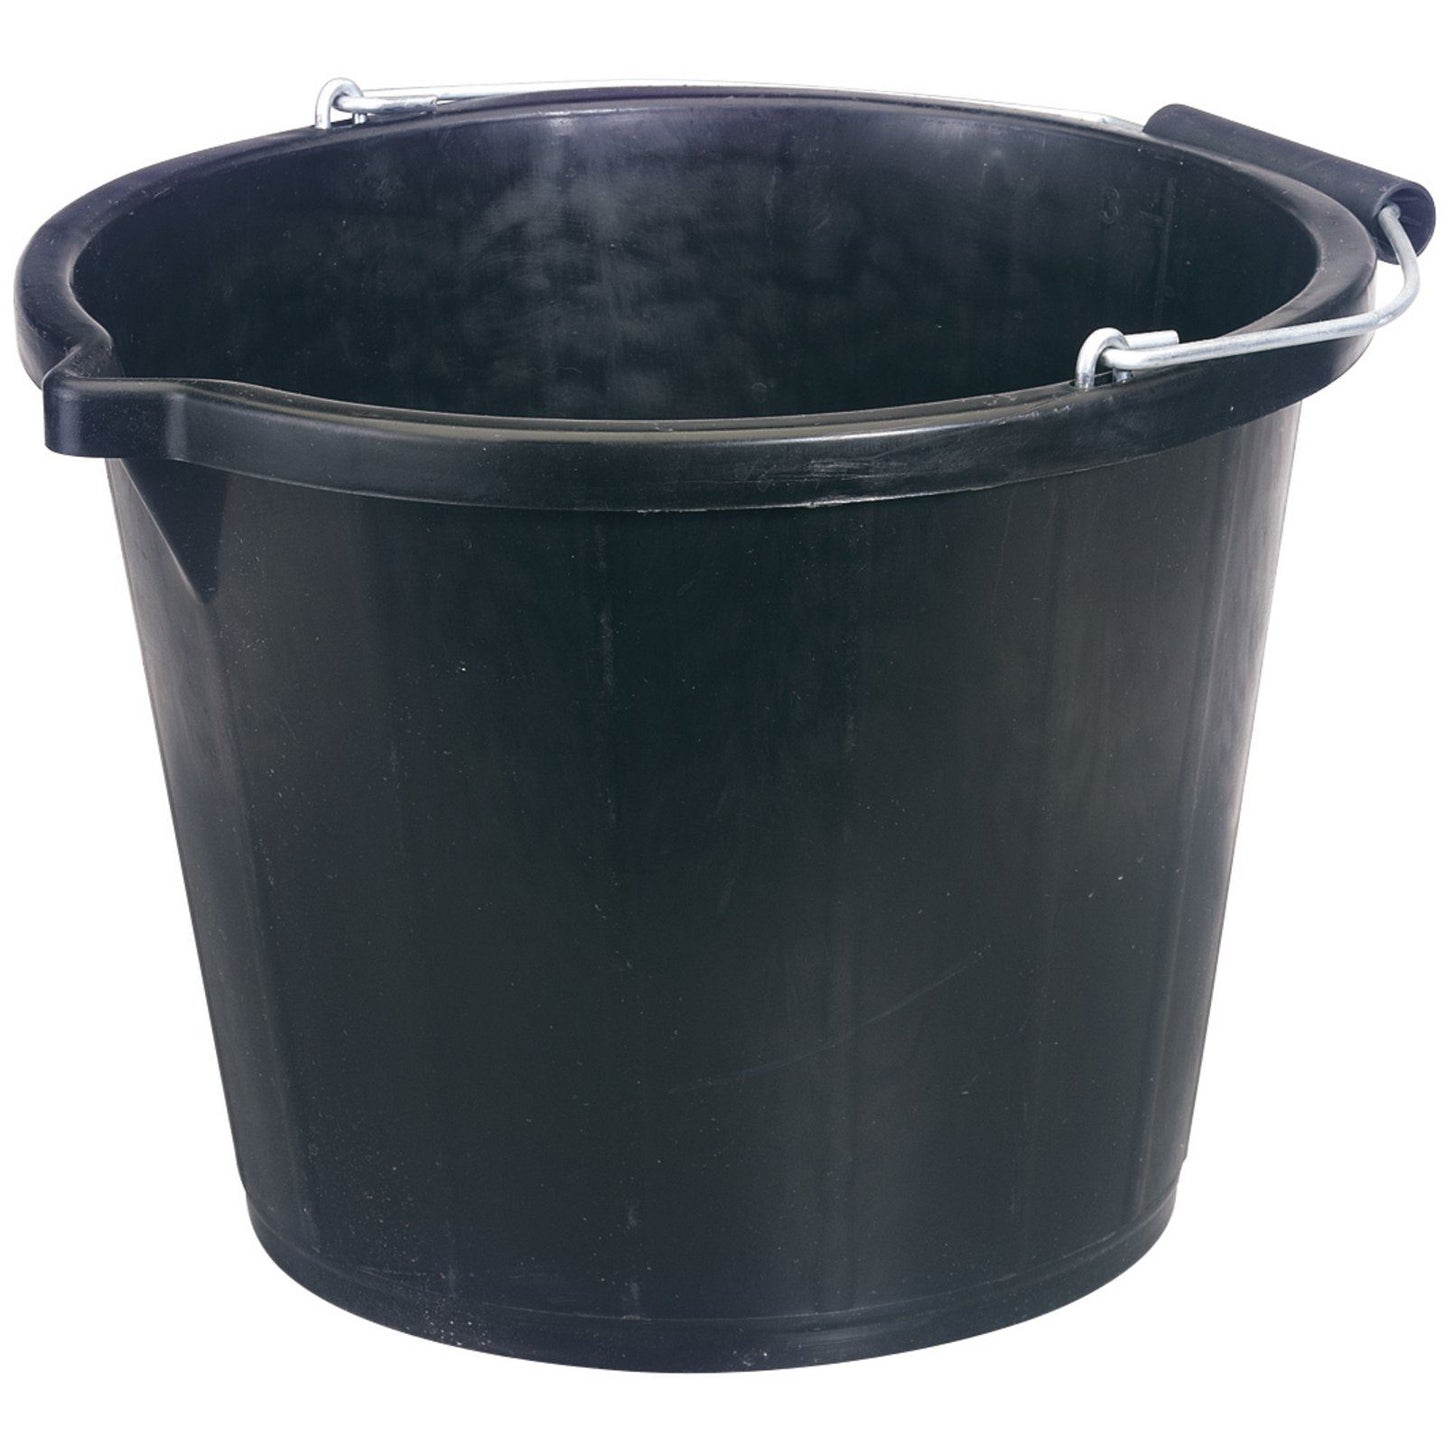 Draper 14.8 Litre Garden/Car Wash Cleaning Water Carry Bucket - Black - 31687